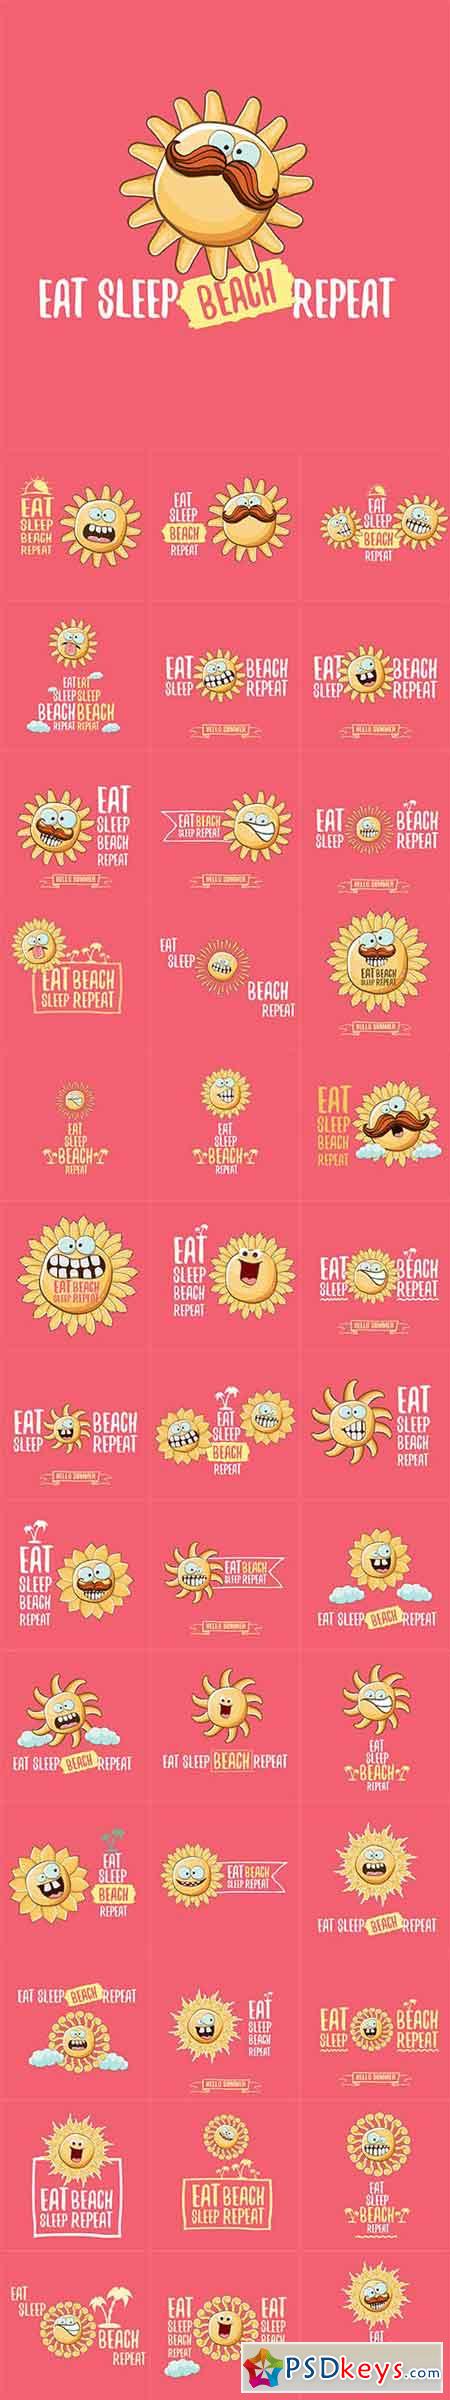 Eat sleep beach repeat concept cartoon illustration or summer poster